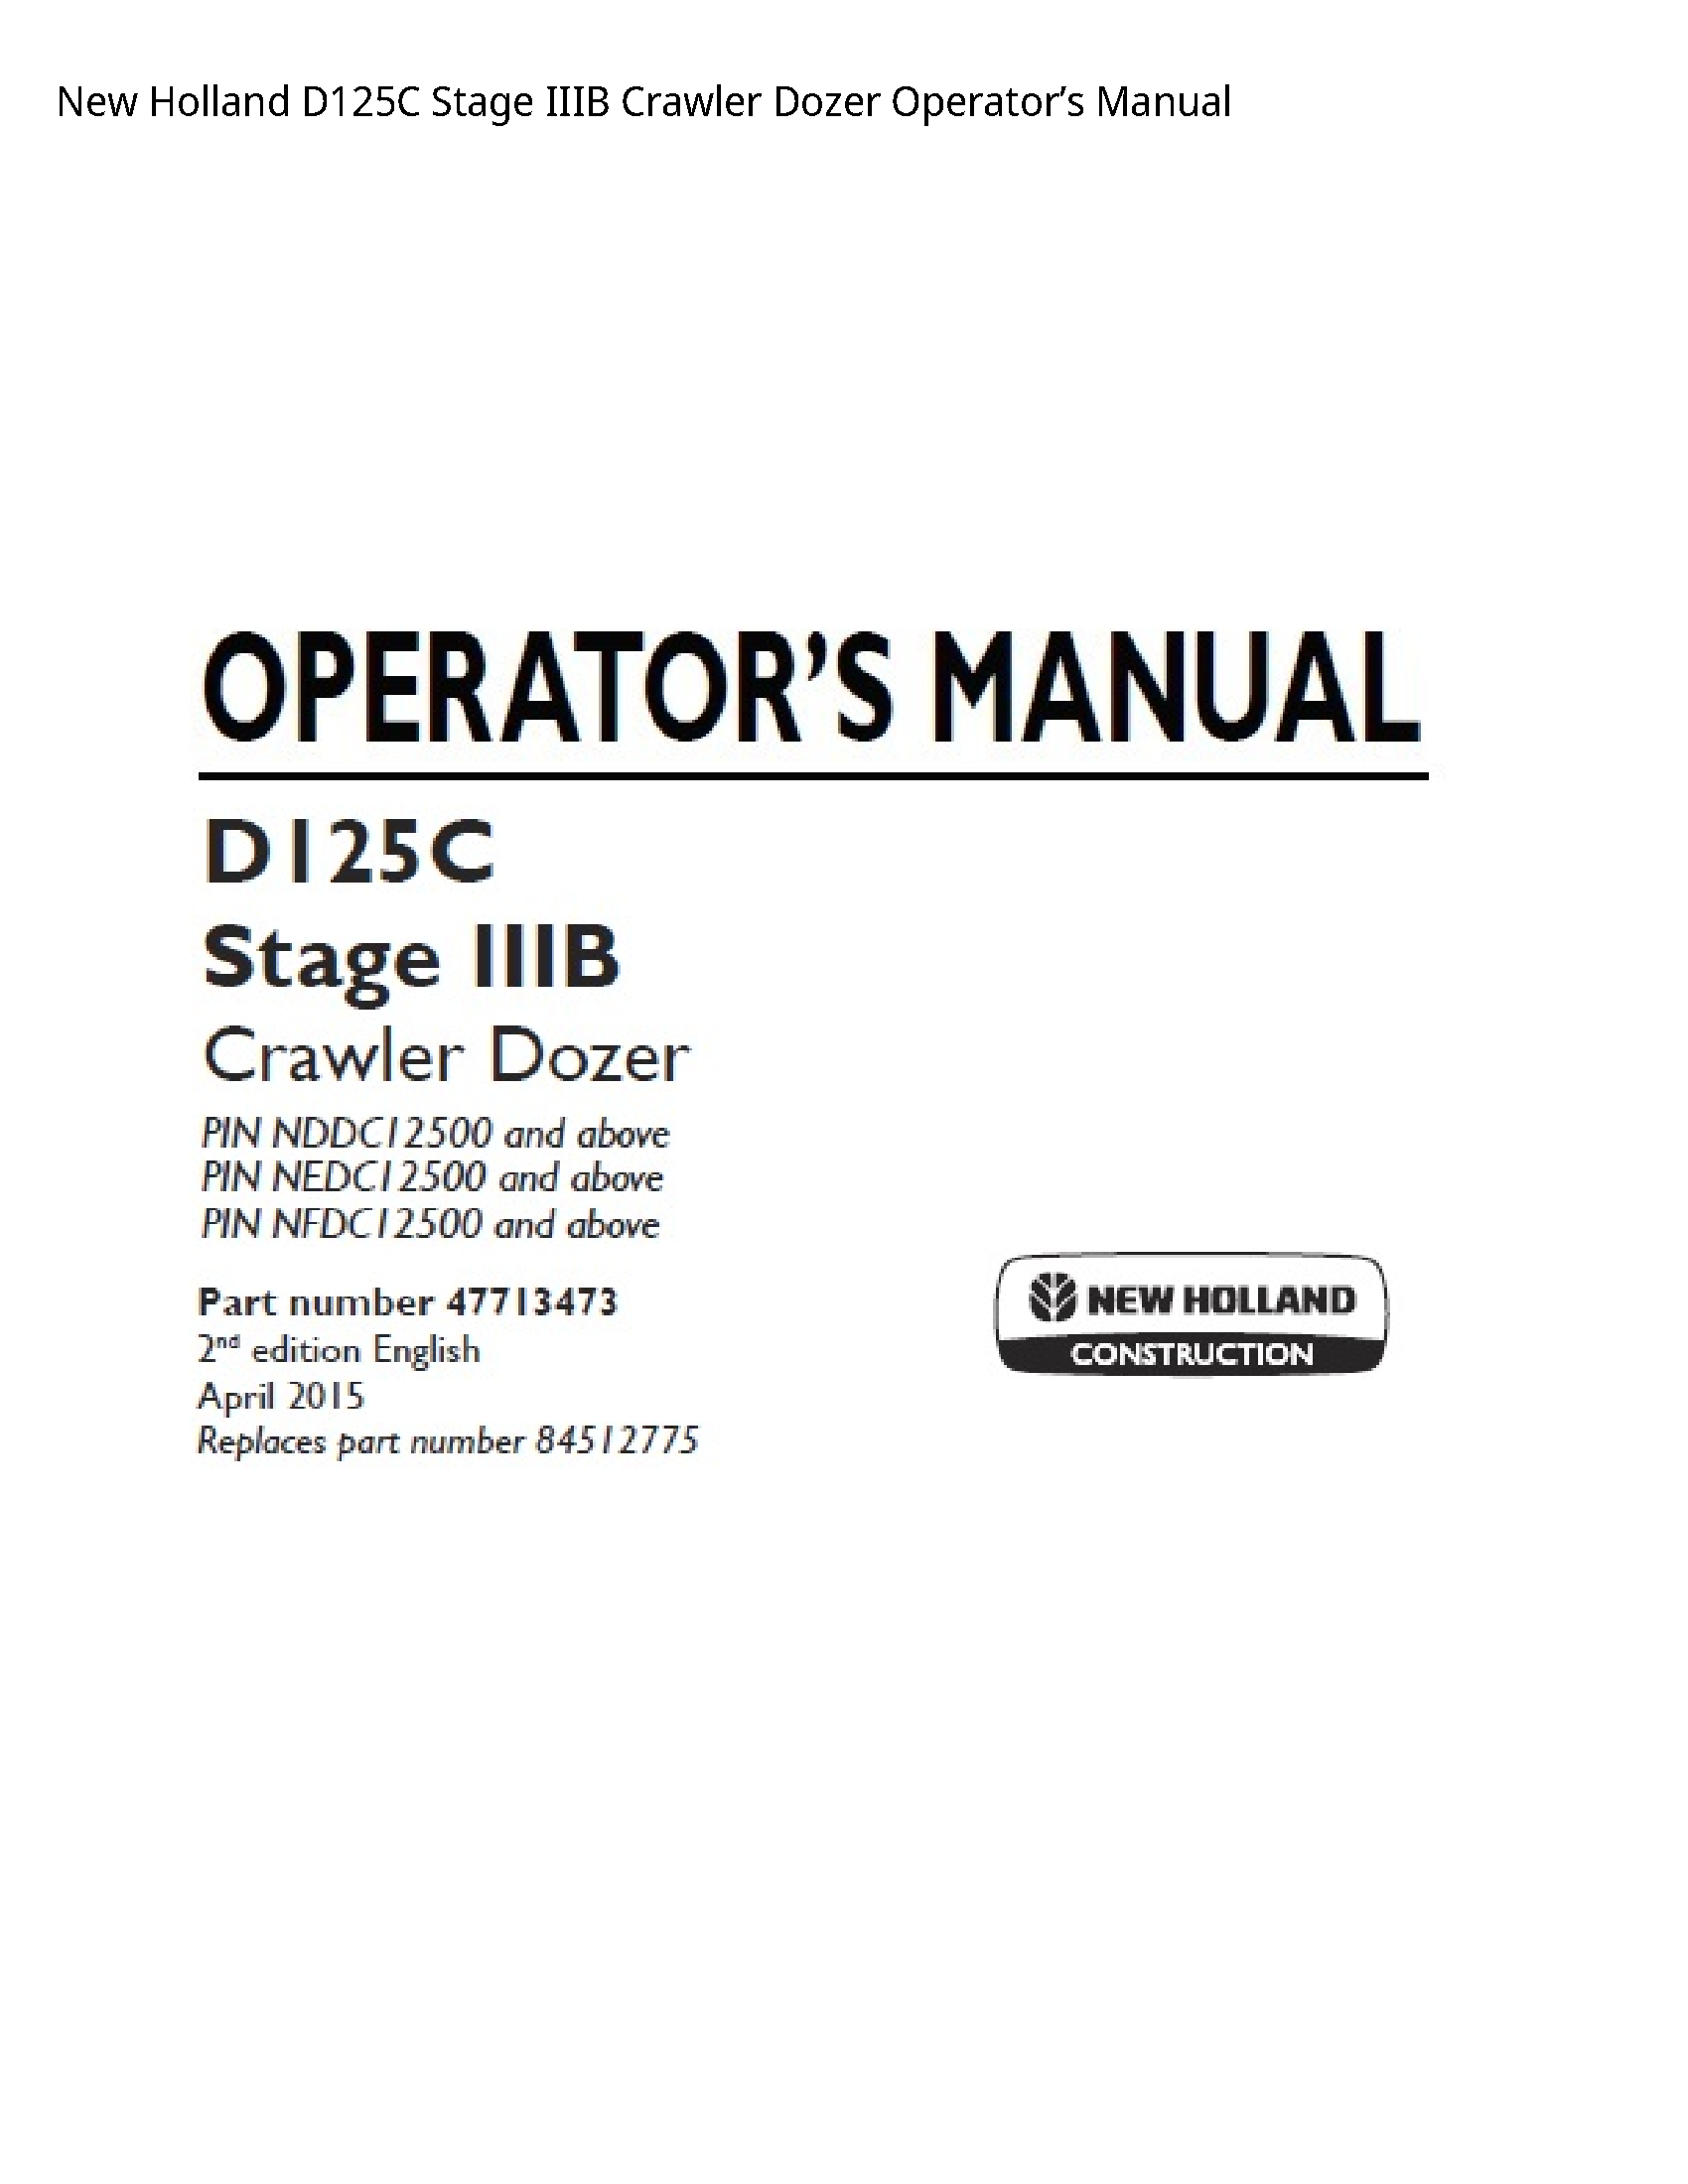 New Holland D125C Stage IIIB Crawler Dozer Operator’s manual